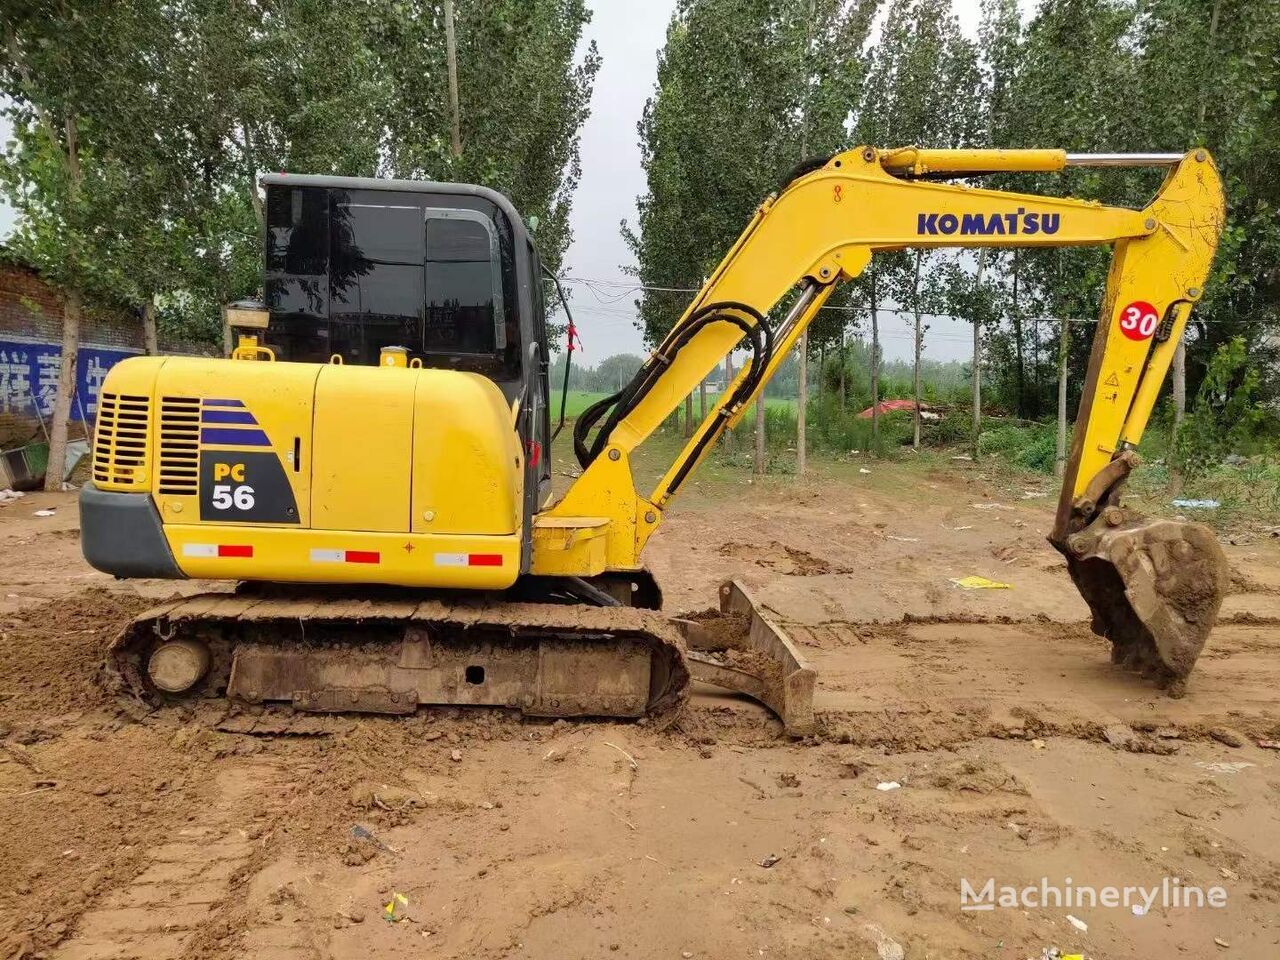 Мини-экскаватор KOMATSU PC56 small excavator 5.6 tons: фото 3